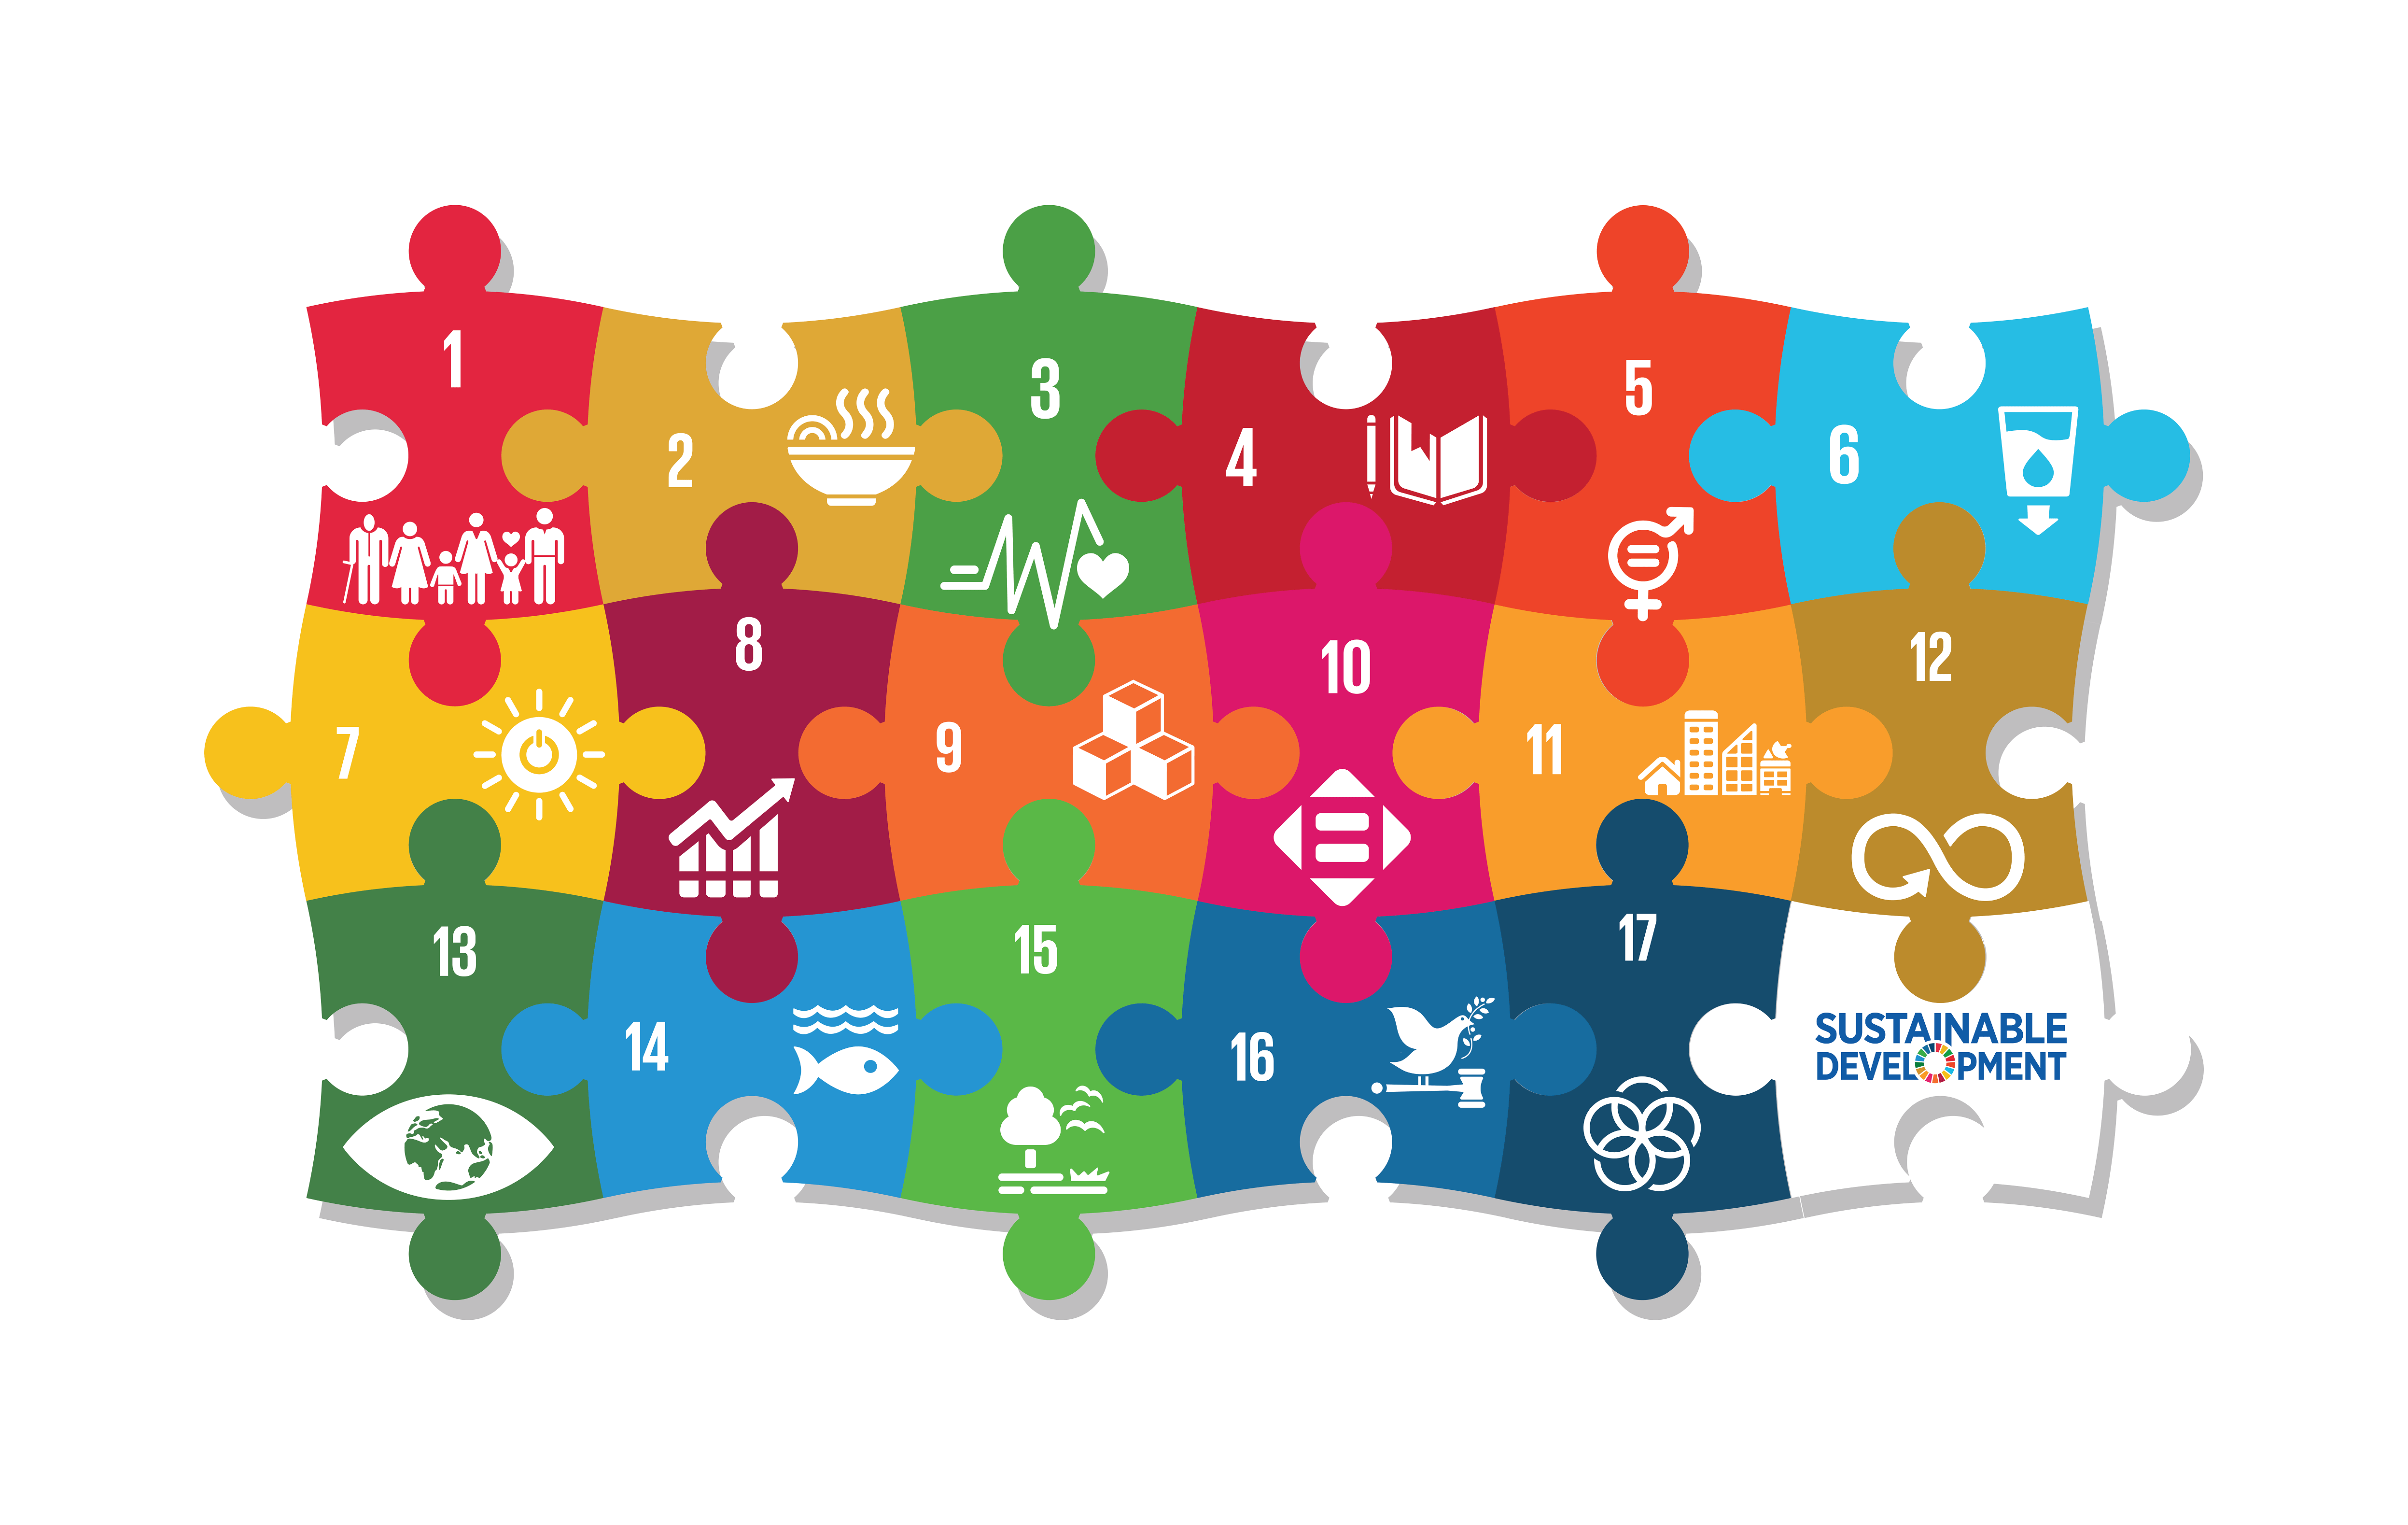 17 UN SDGs to remember